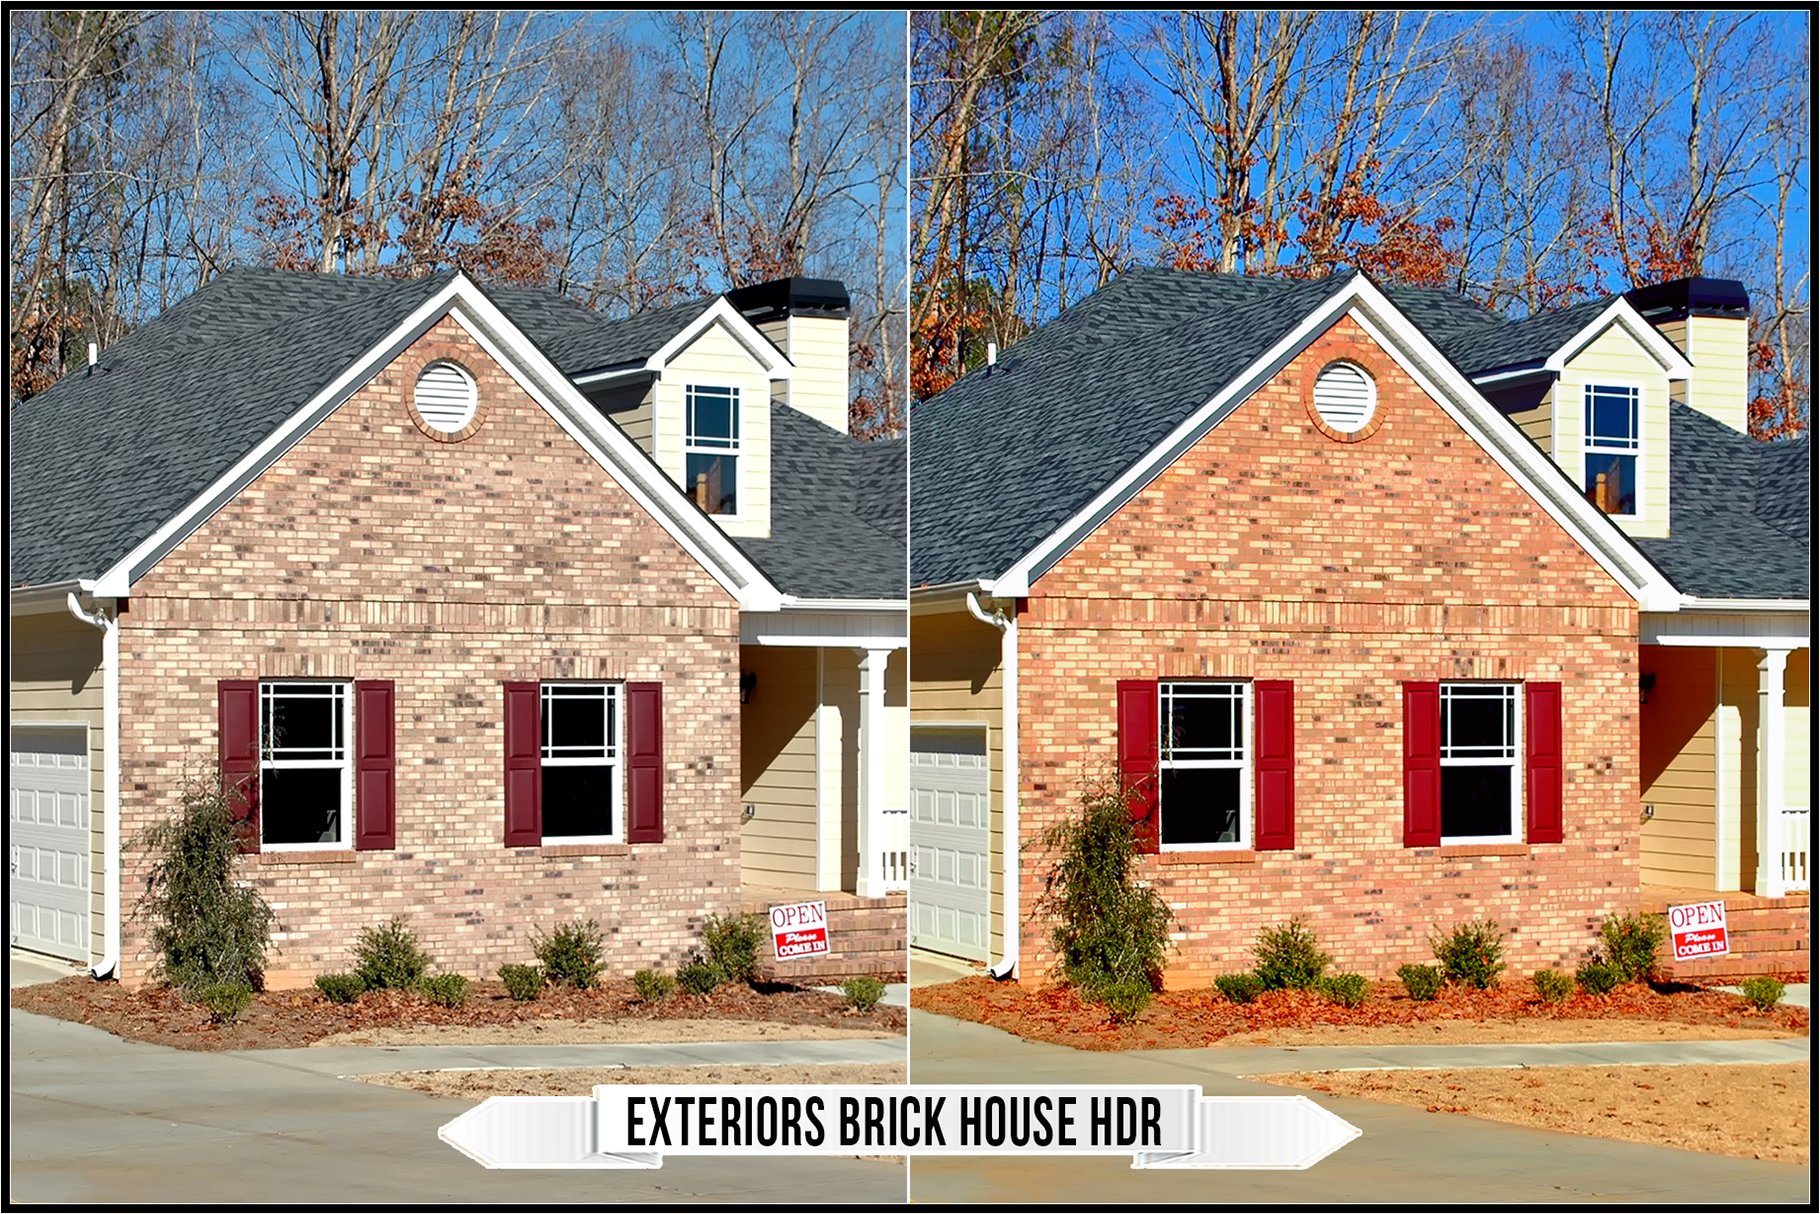 exteriors brick house hdr 700